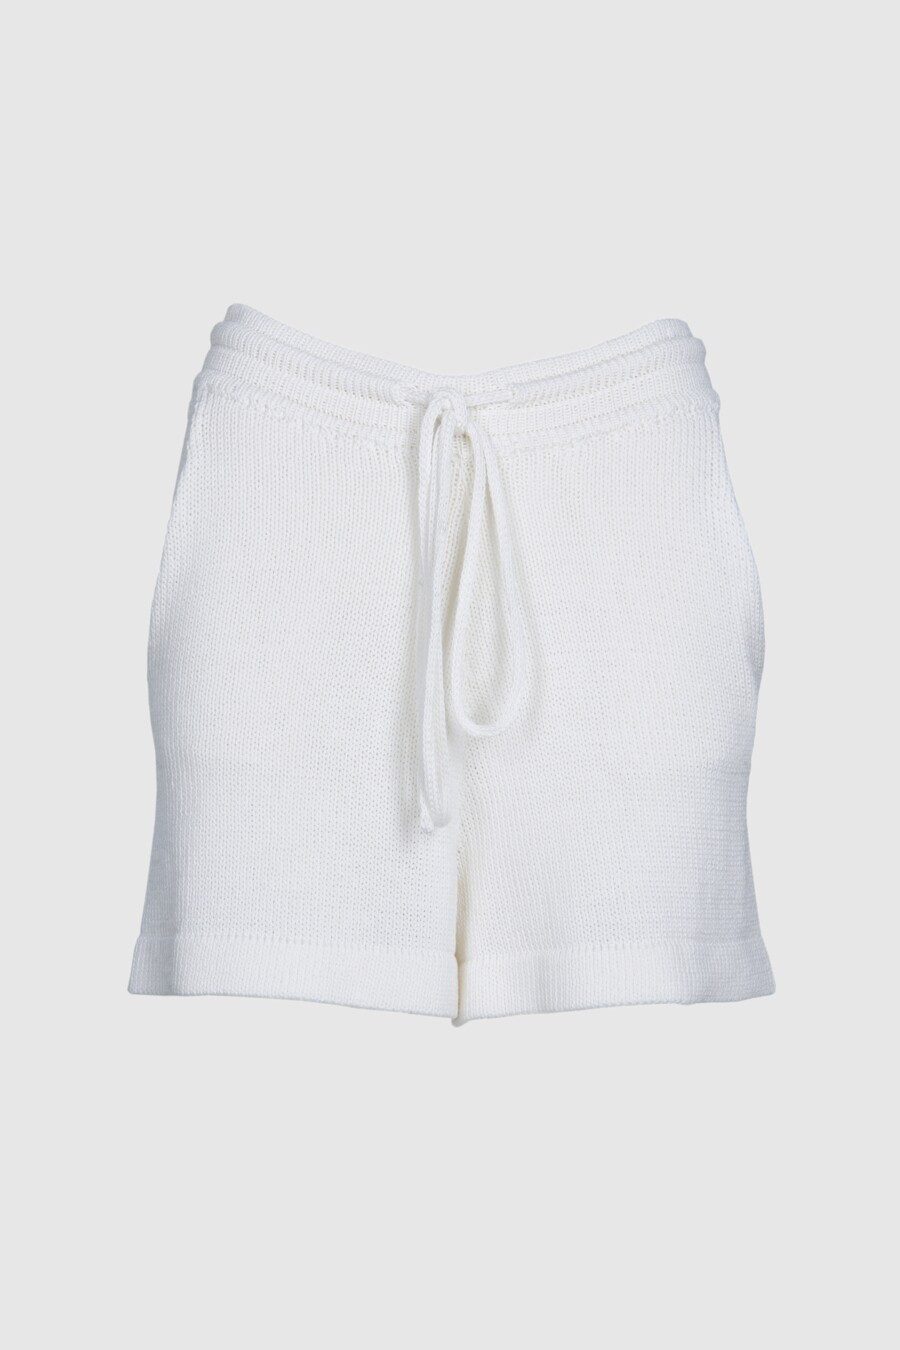 Boscana Shorts Shorts in Weiss gestrickt